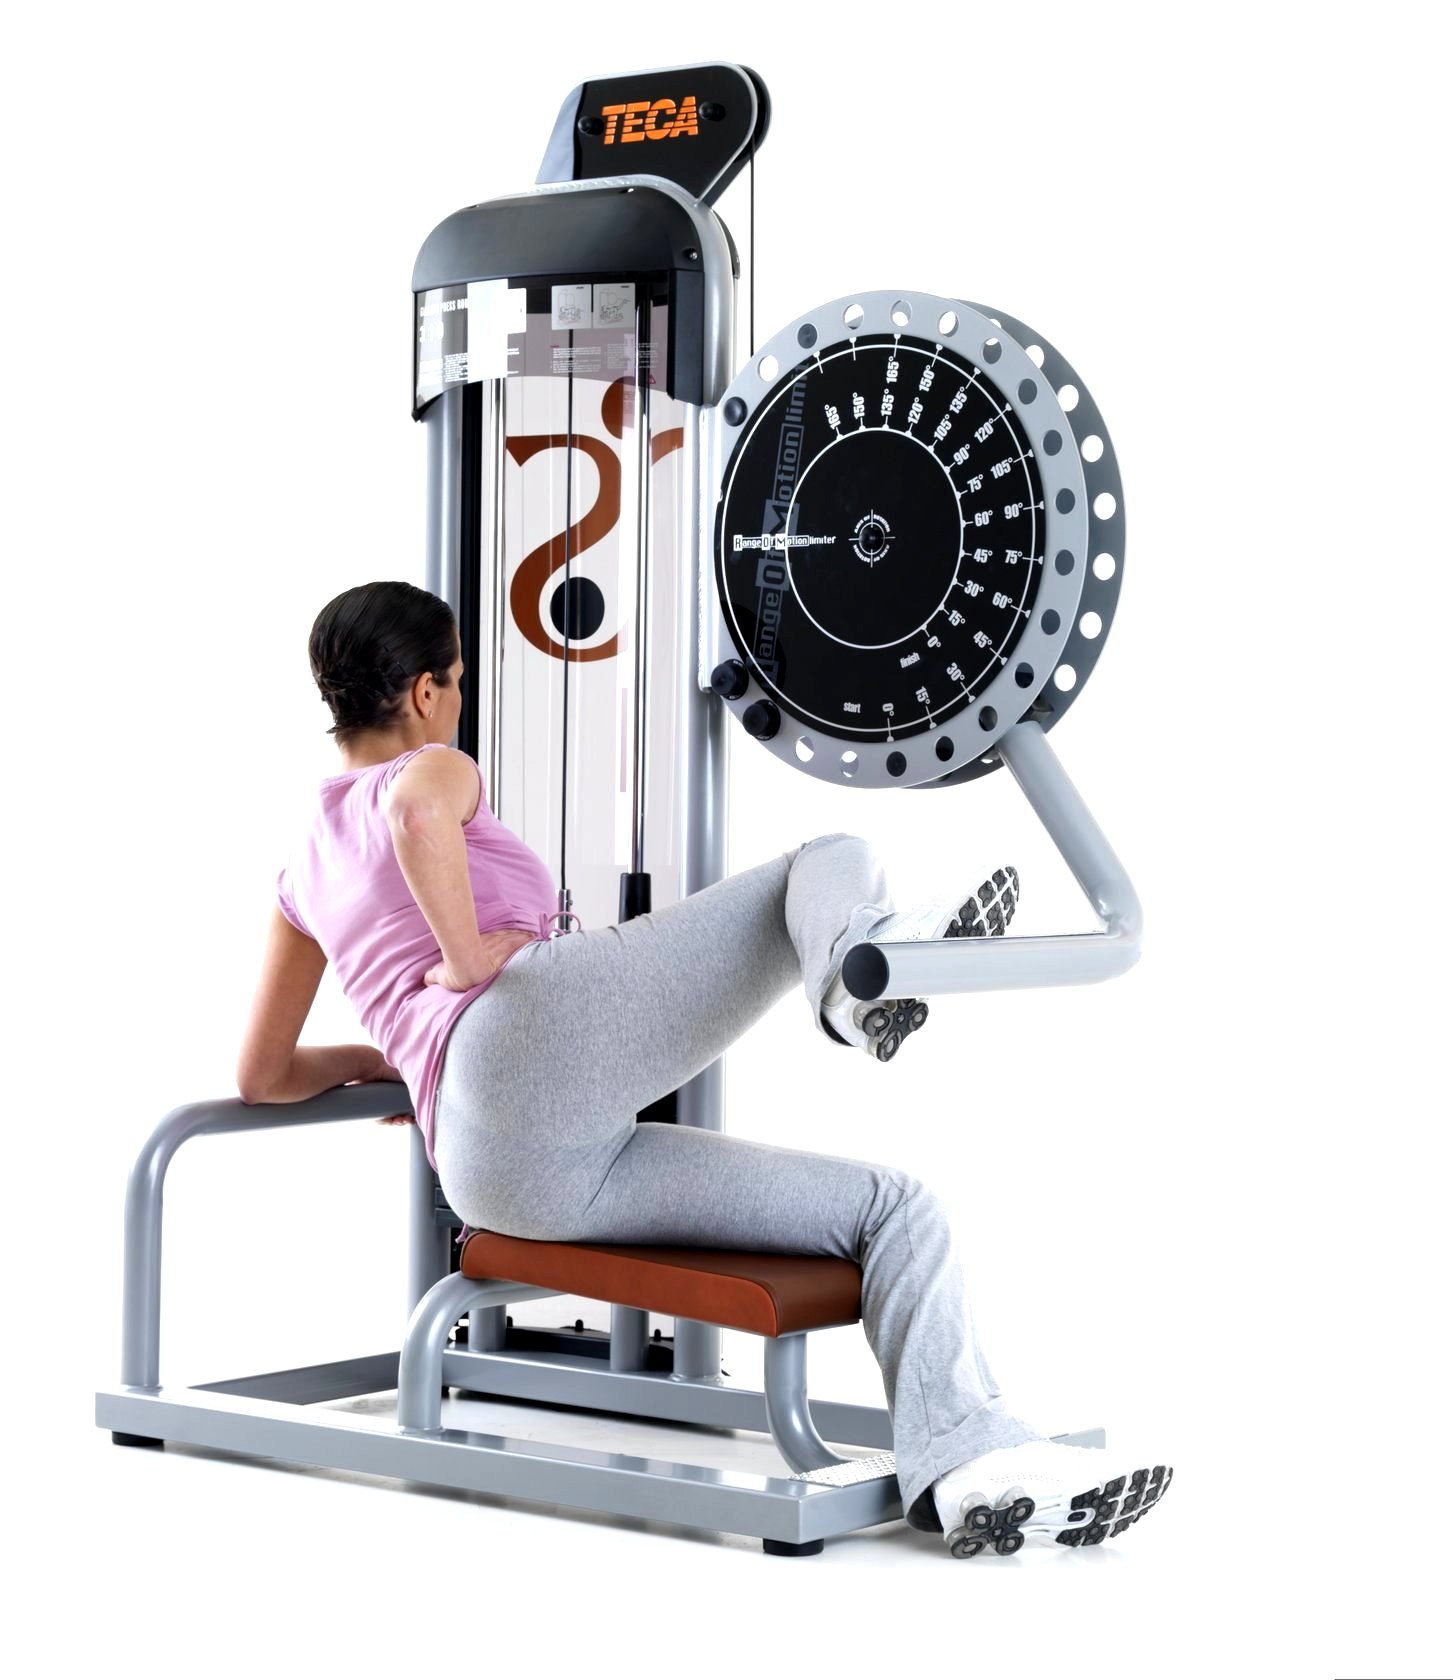 TECA PS SP310 Gluteus press fitness equipment.